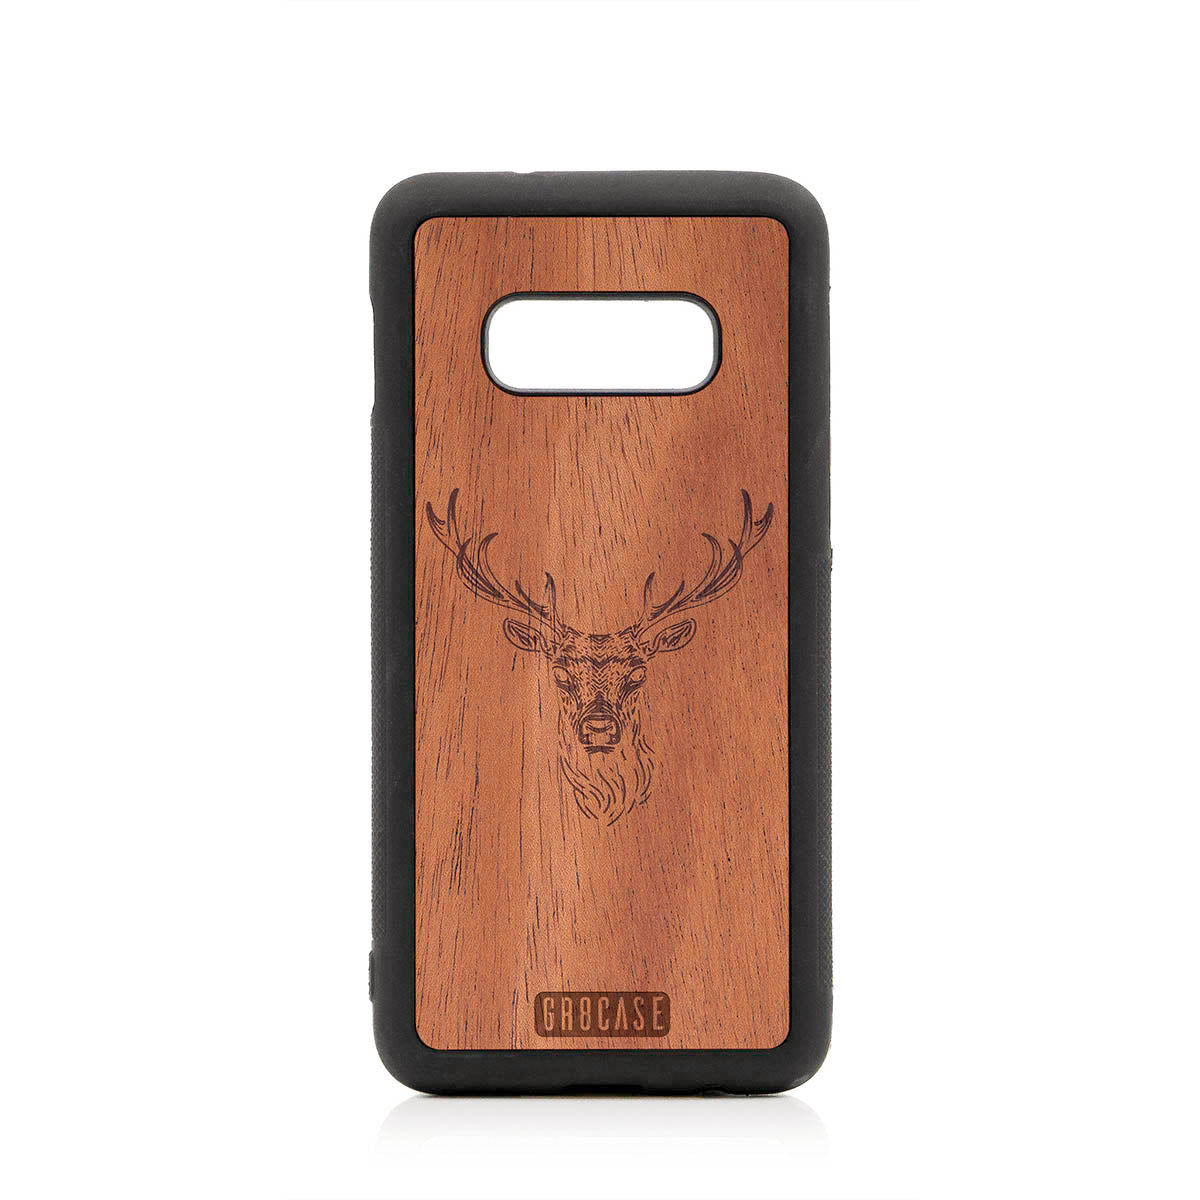 Elk Buck Design Wood Case For Samsung Galaxy S10E by GR8CASE